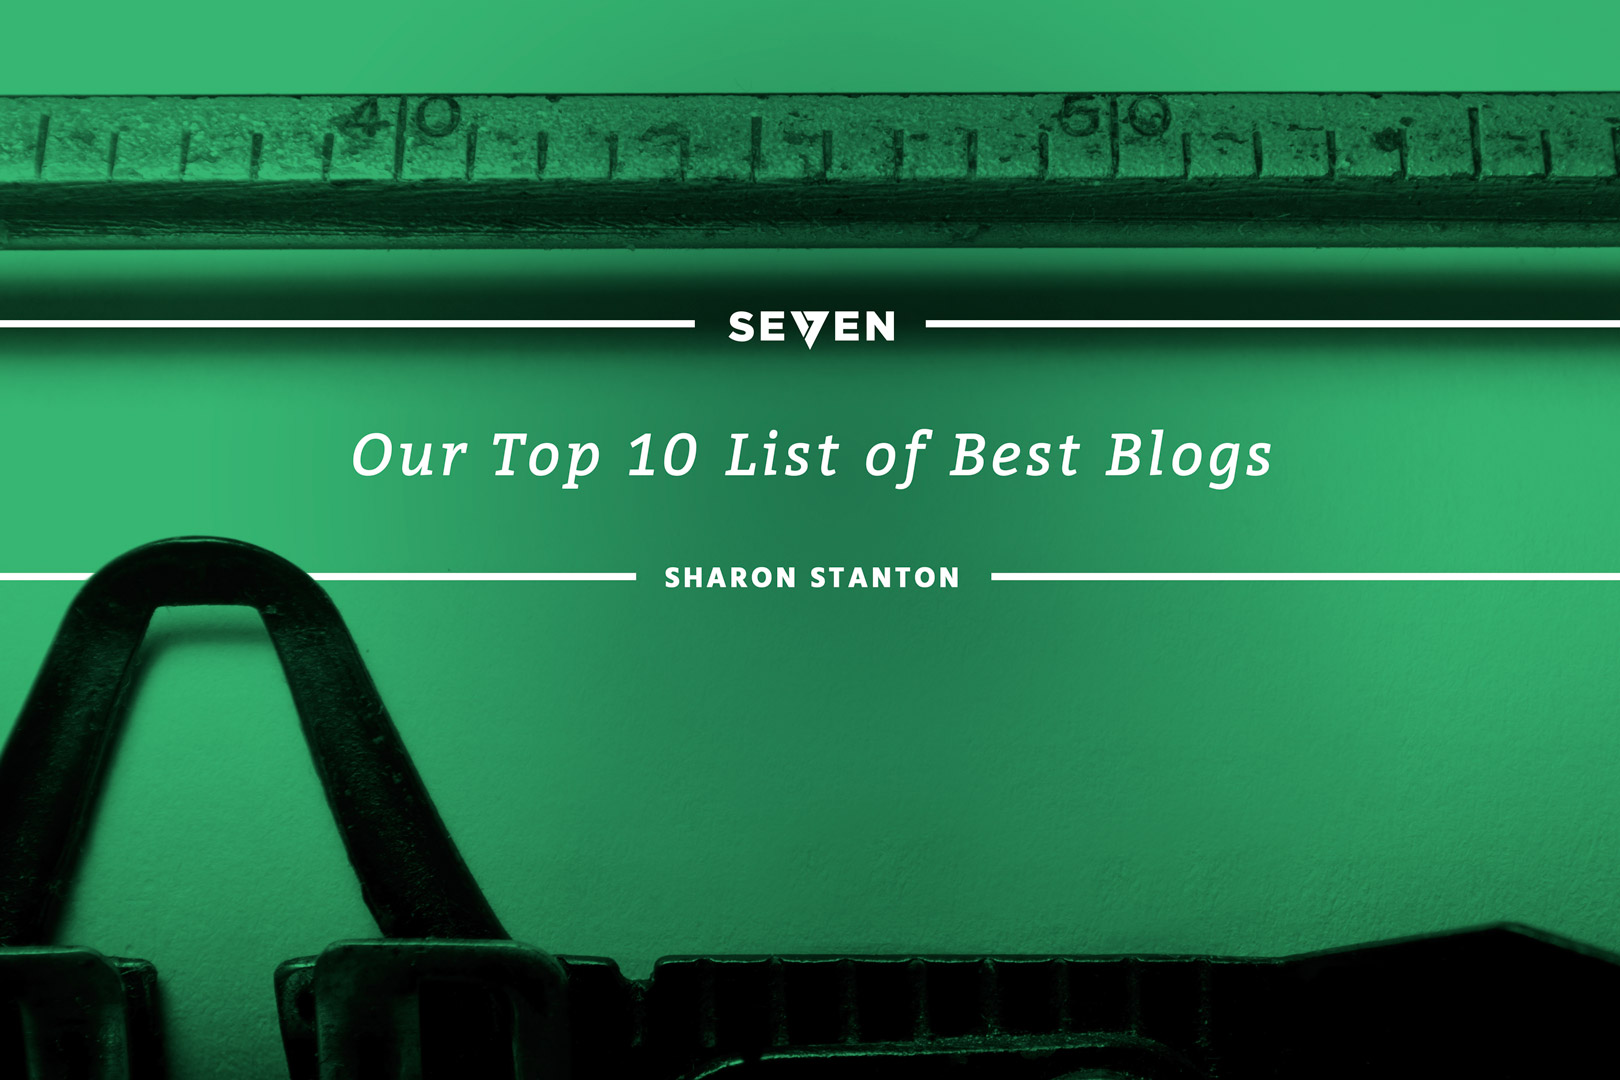 Our Top Ten List of Best Blogs